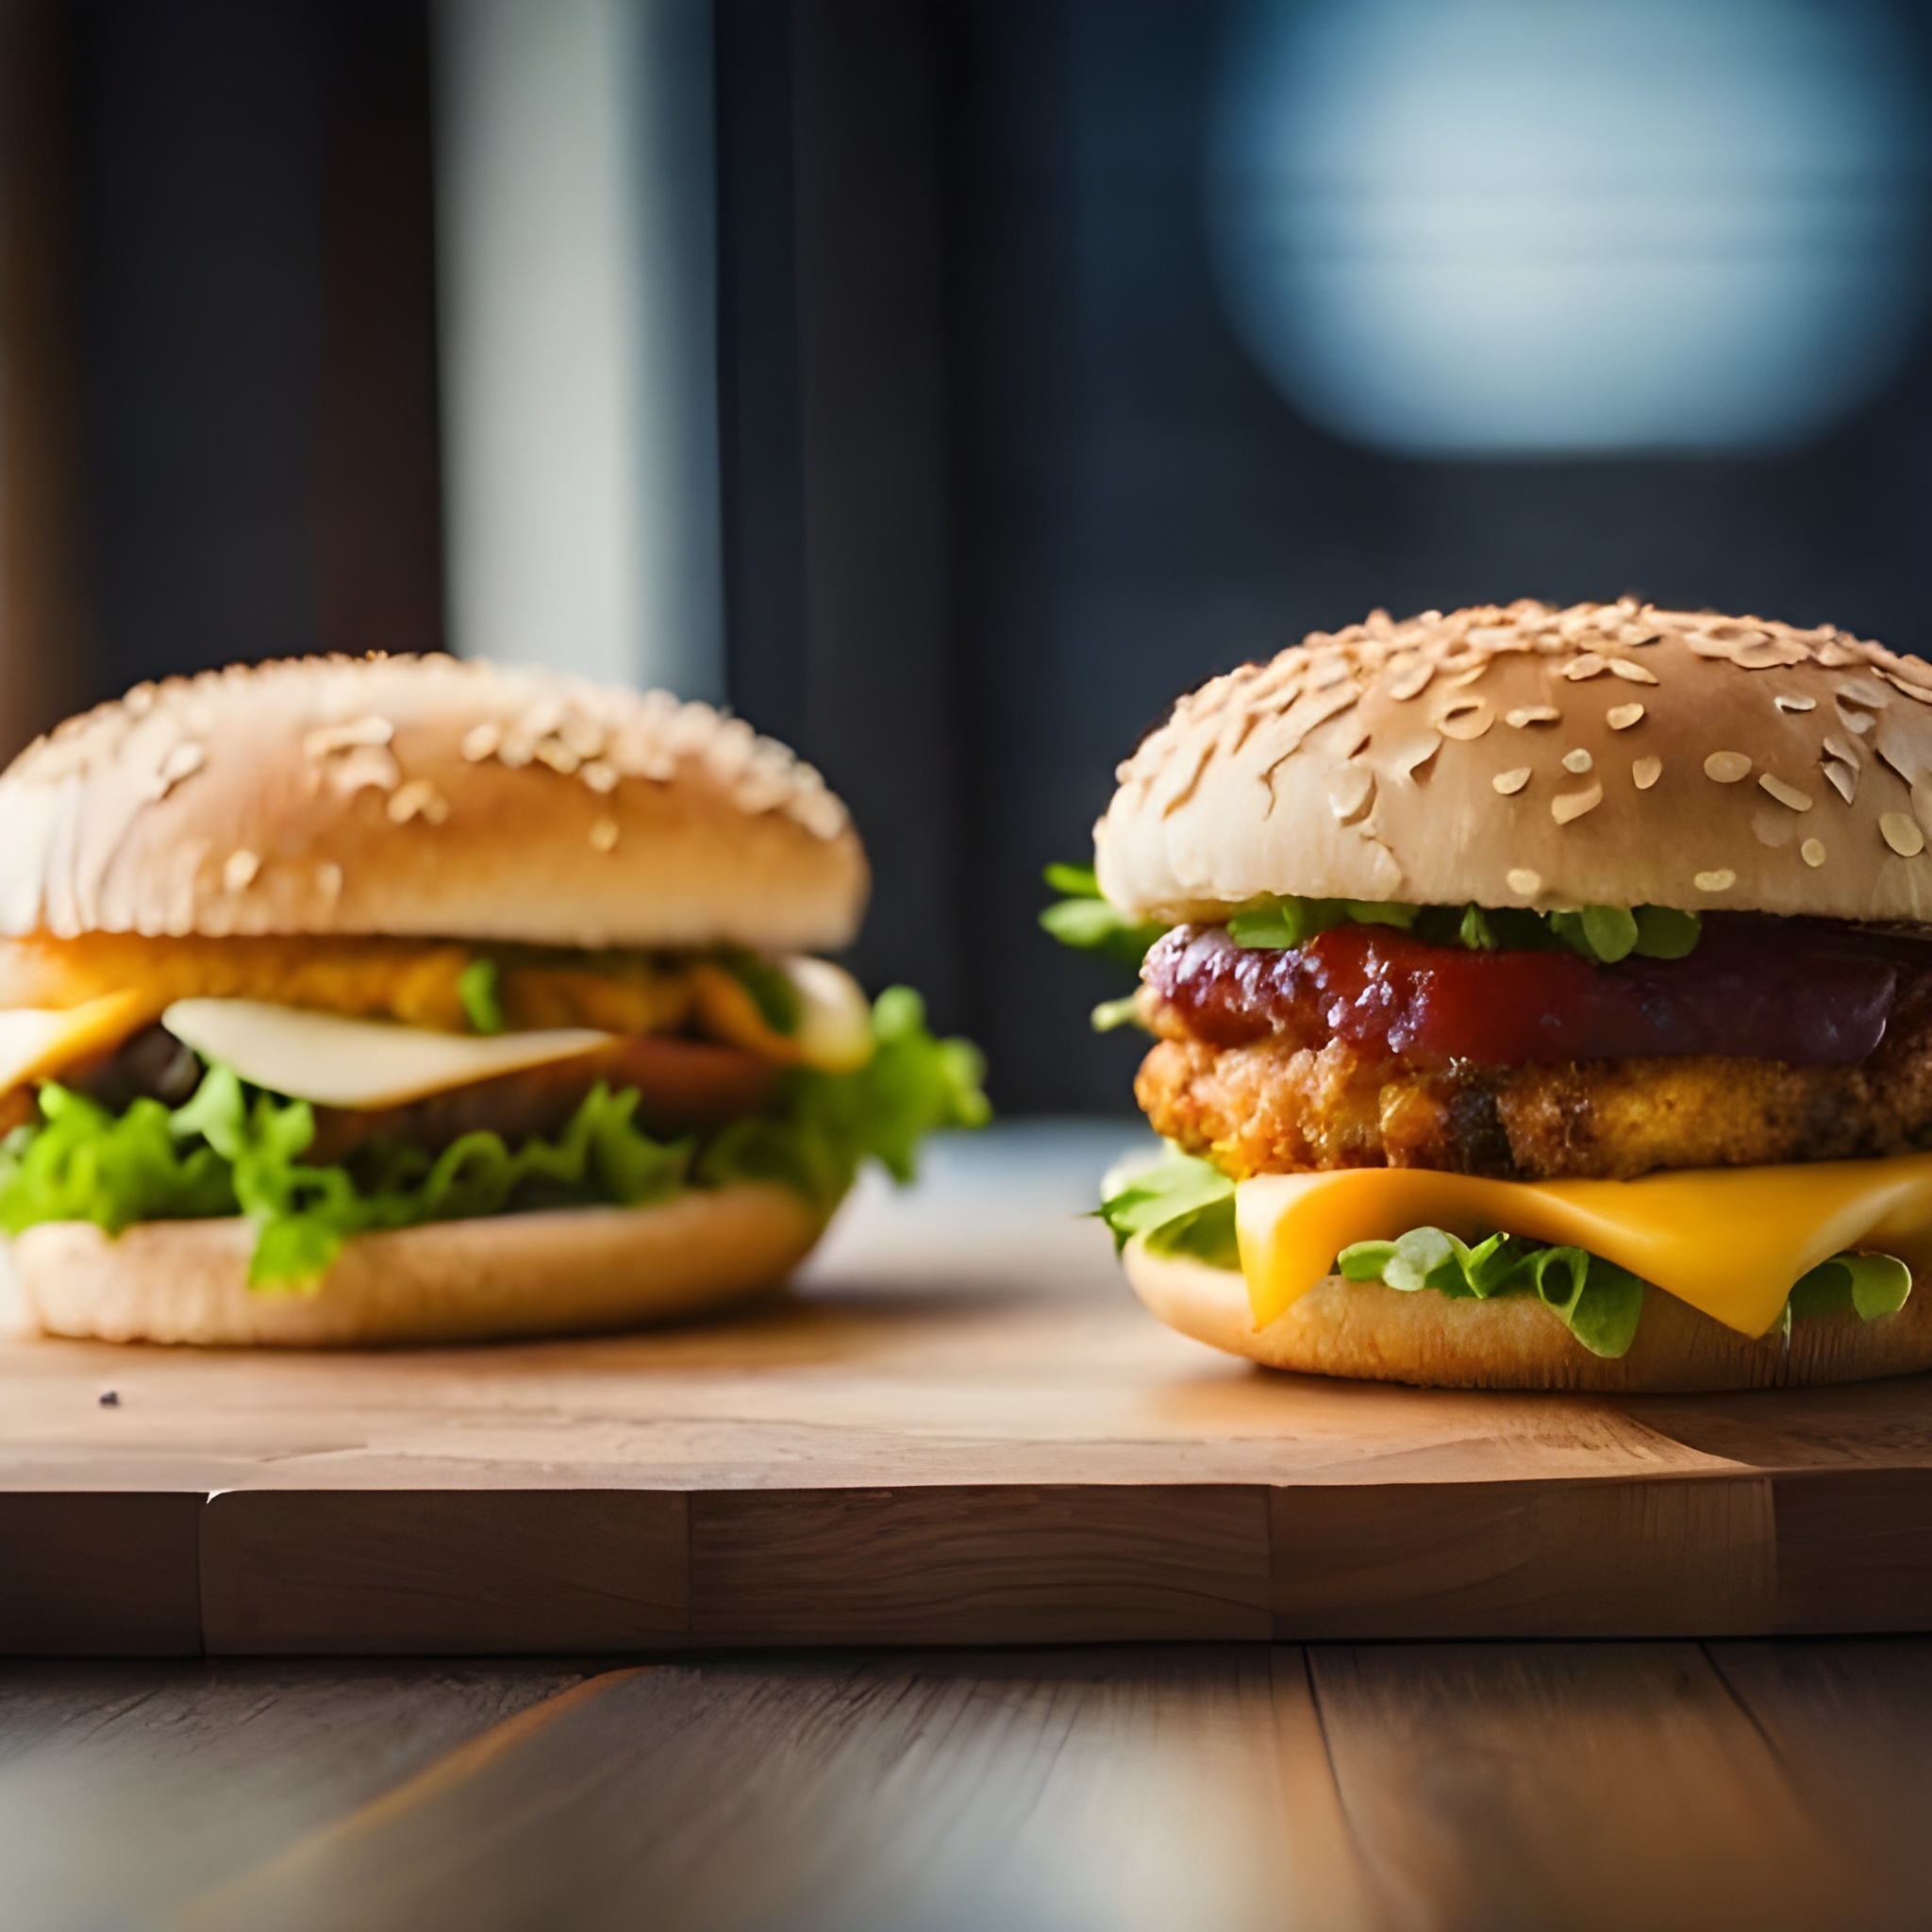 Burger King Menu For Vegan London – Mouth-Wateringly Delicious!